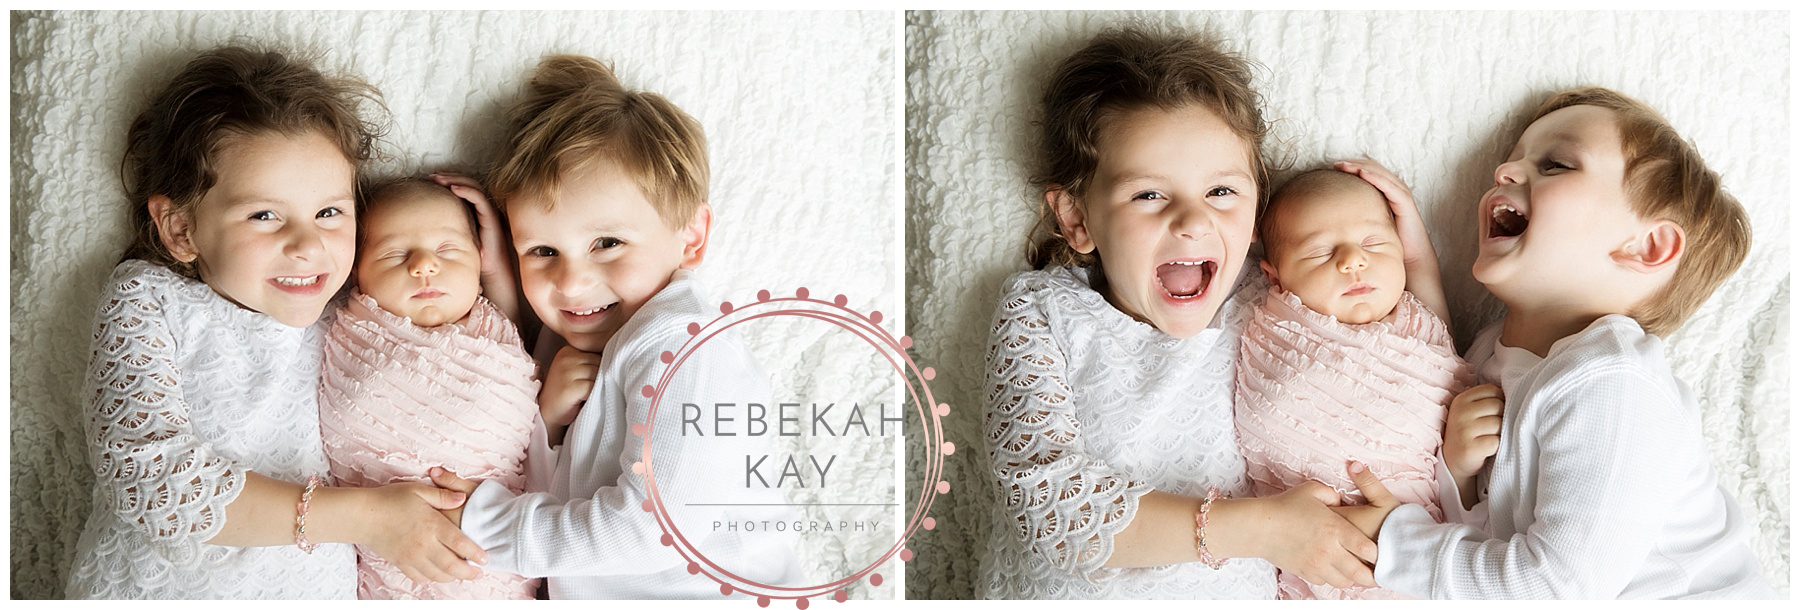 baby girl photography rebekah kay windham002